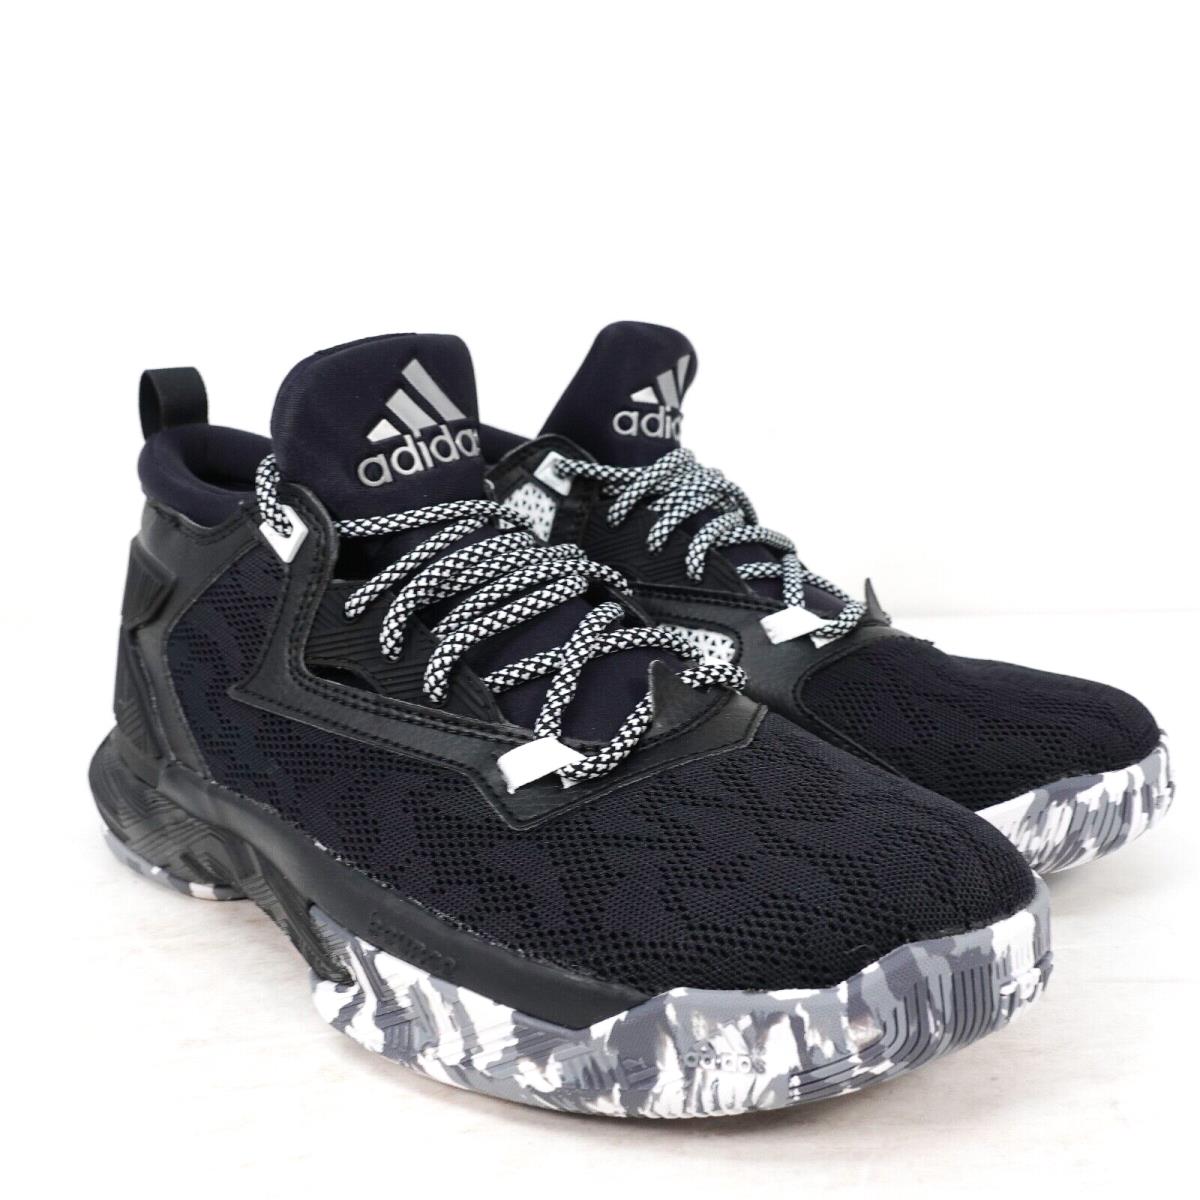 Adidas D Lillard 2.0 Black White Basketball Shoes B42383 Mens Size 7